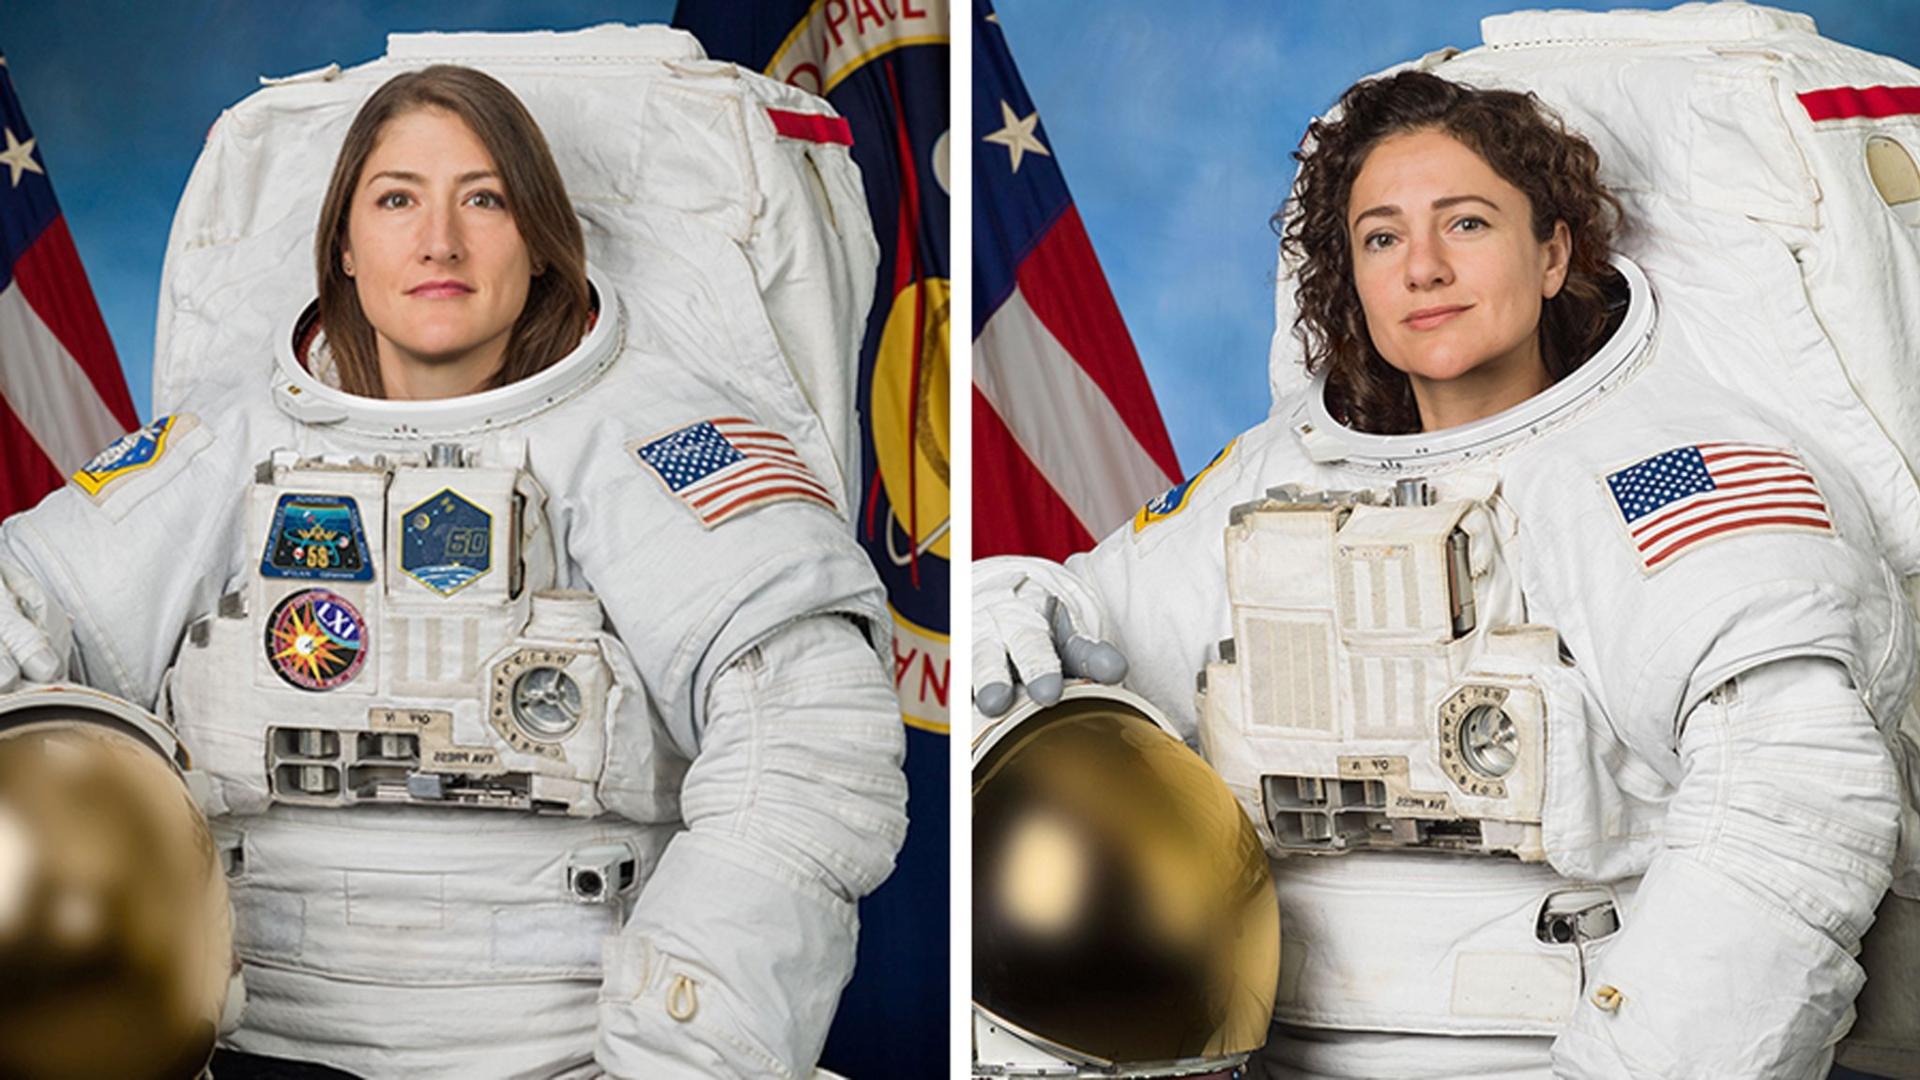 NASA Astronauts complete All-Woman Spacewalk_40.1